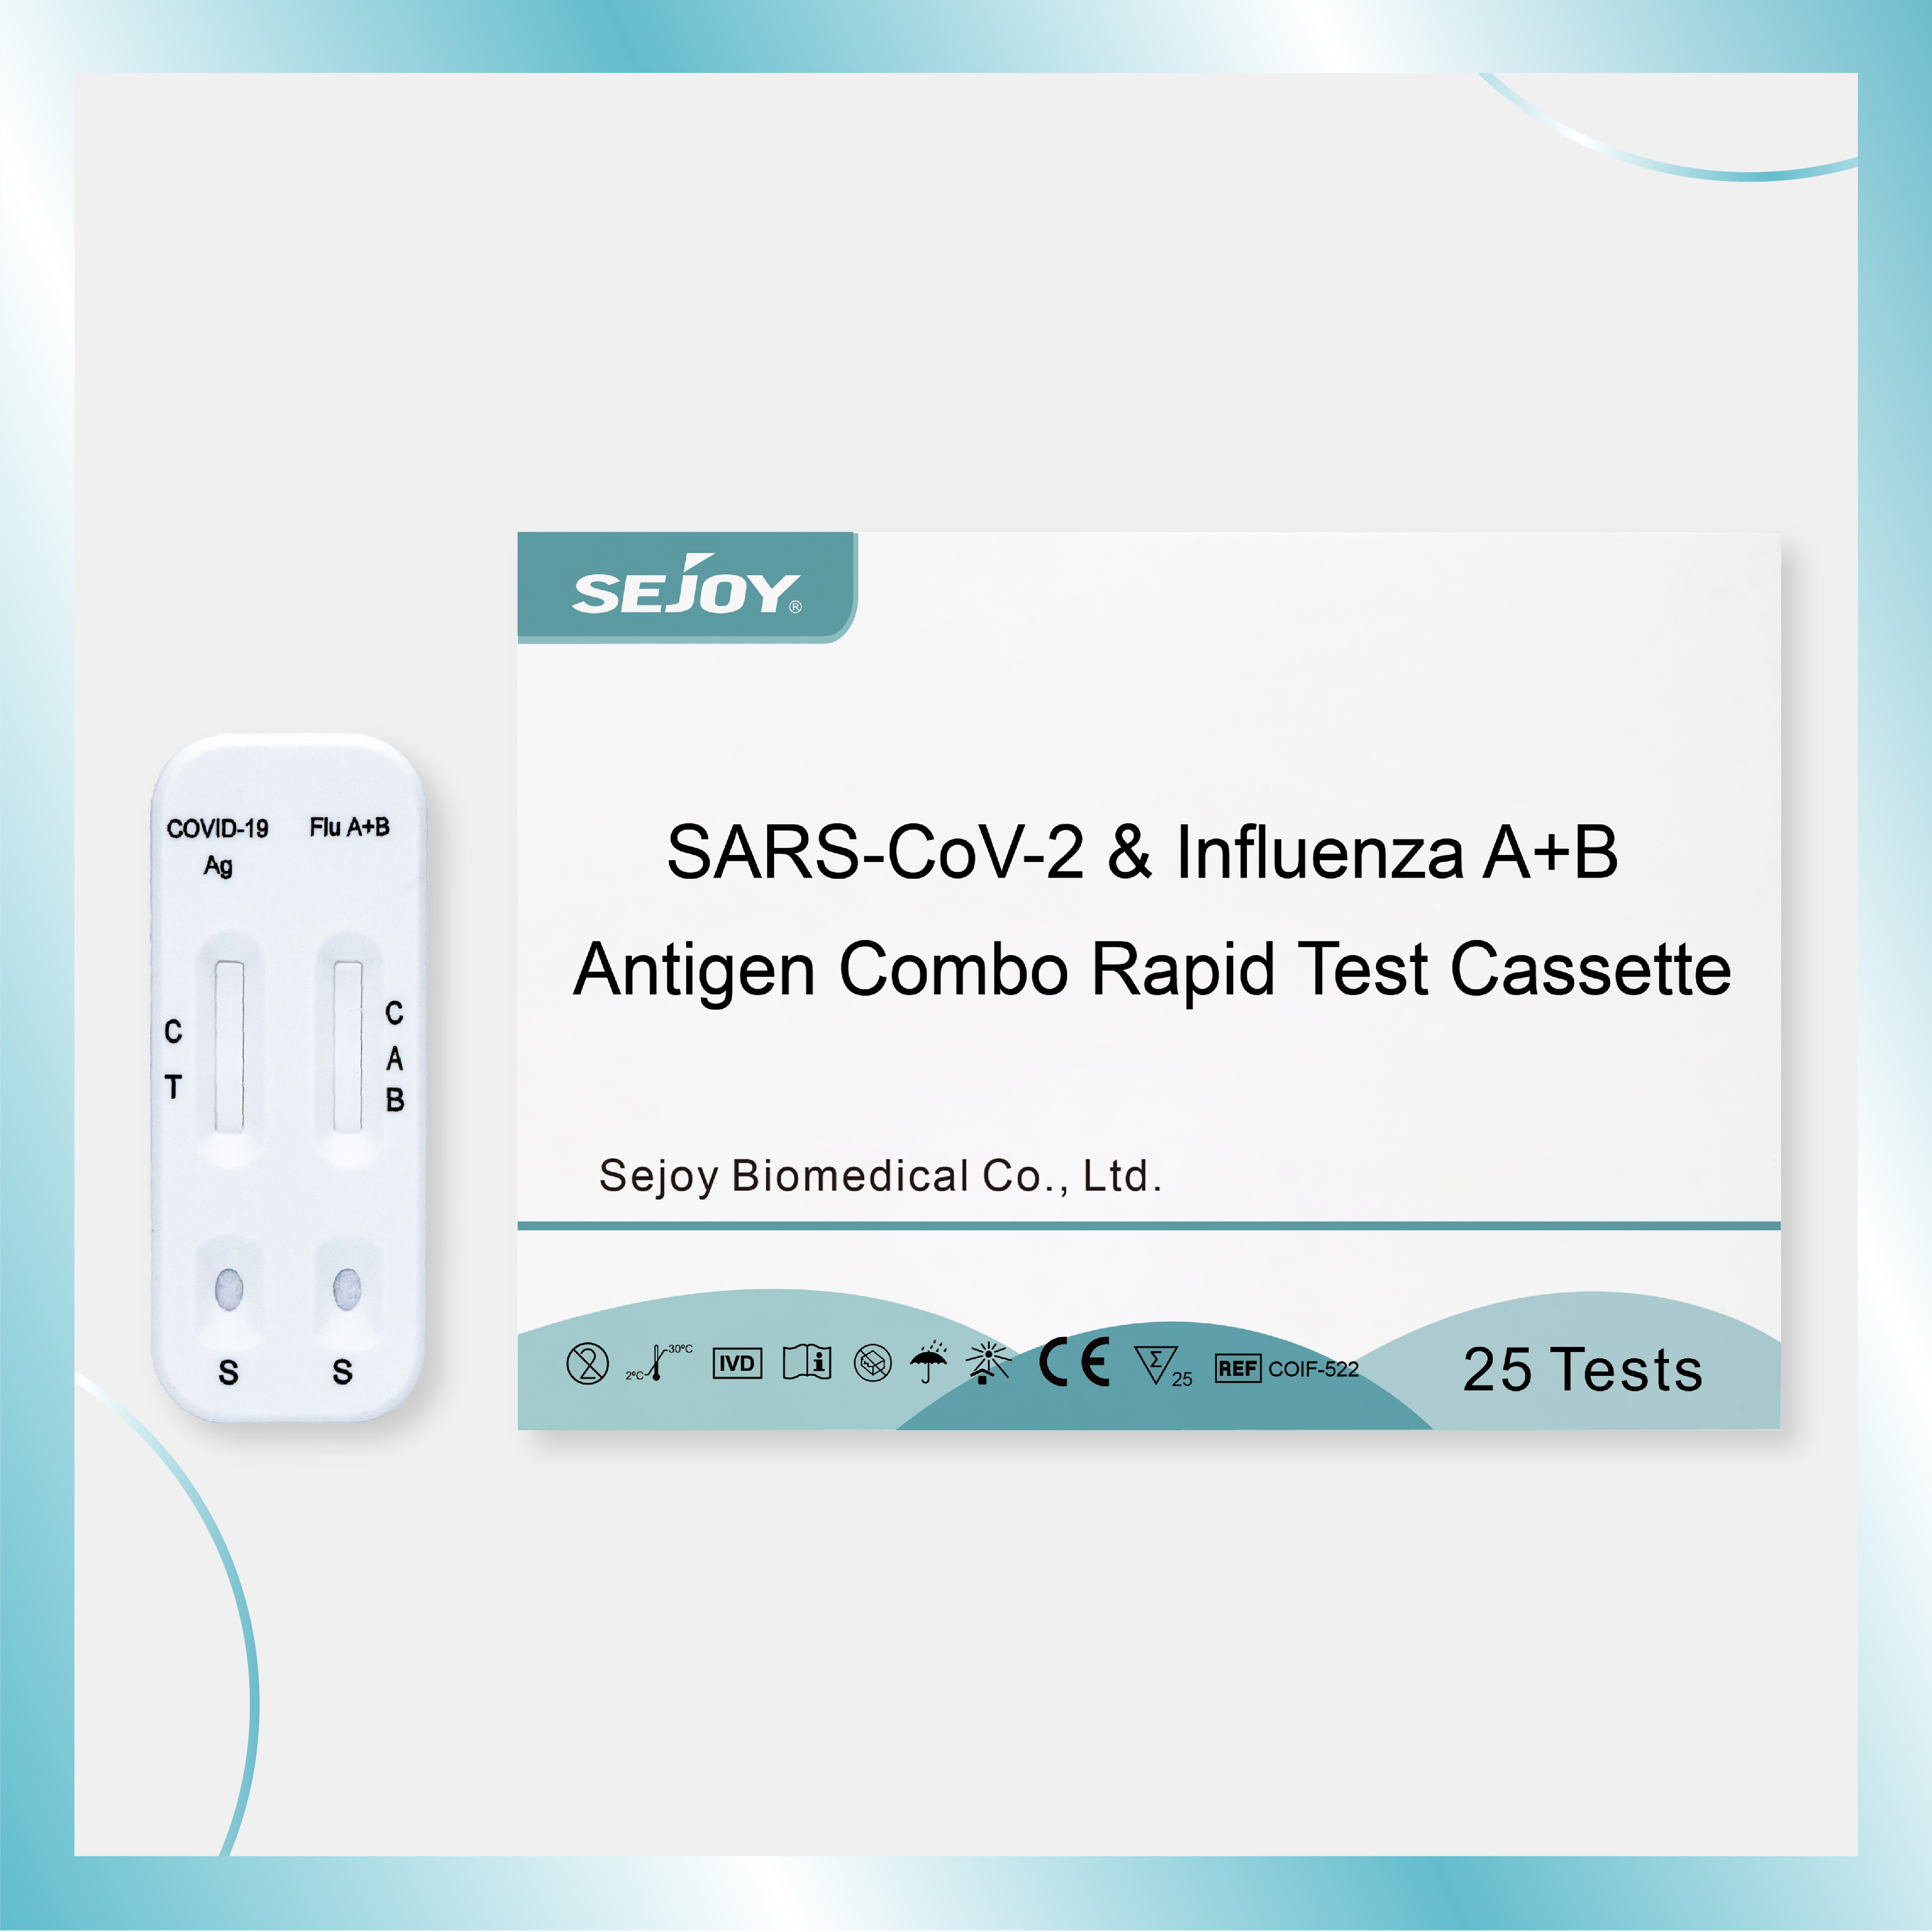 SARS-CoV-2 & Influensa A+B Antigen Combo Rapid Test Cassette